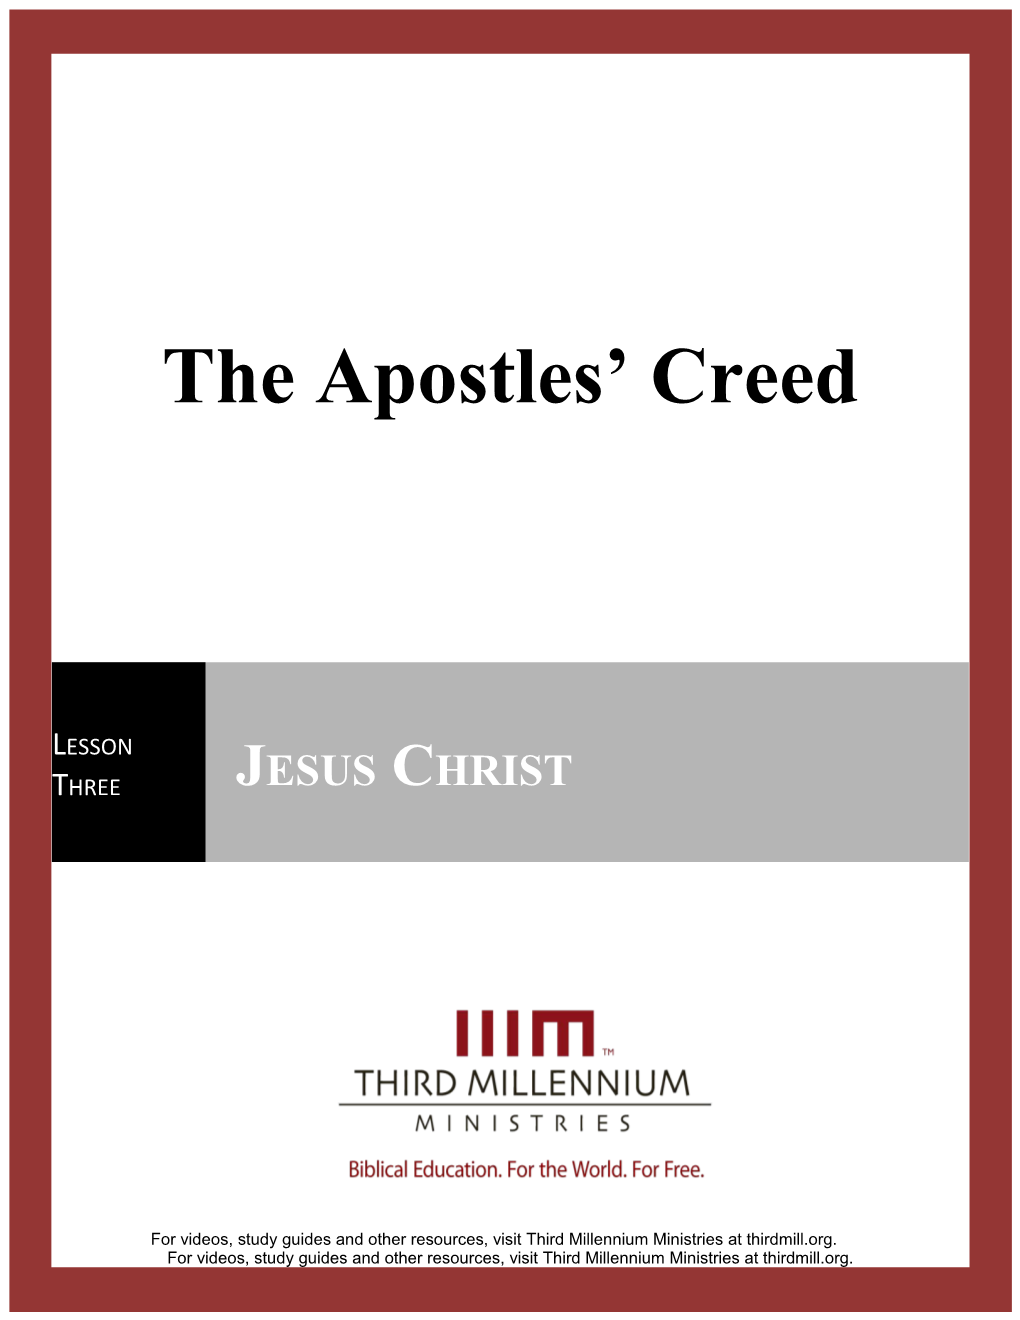 The Apostles' Creed, Lesson 3